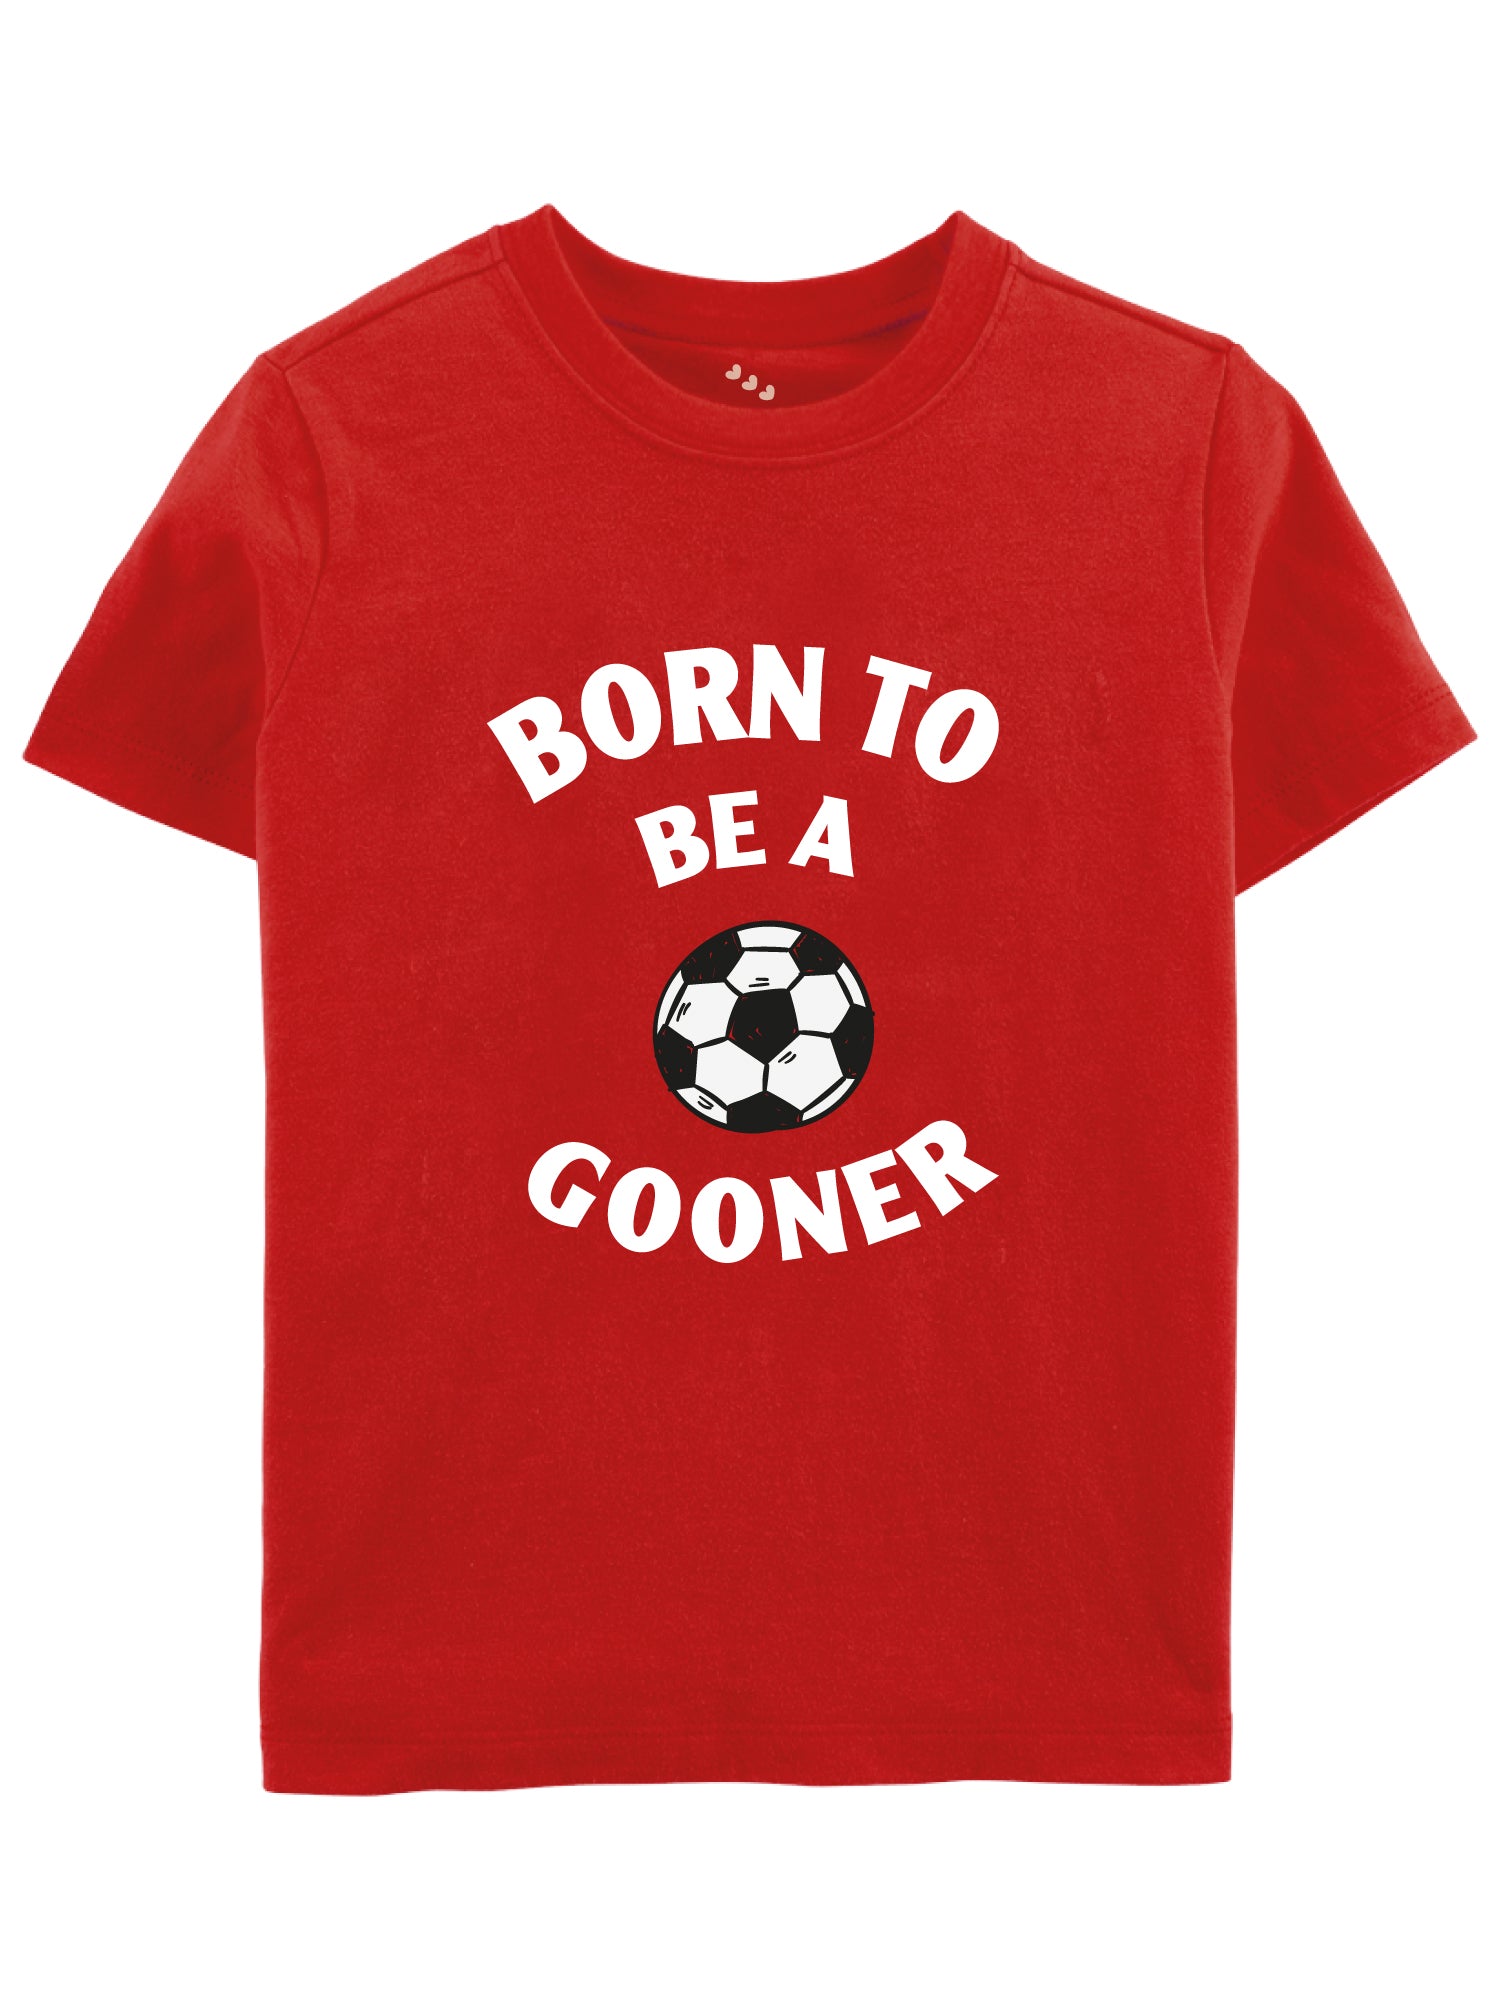 Born to be a Gooner - Tshirt